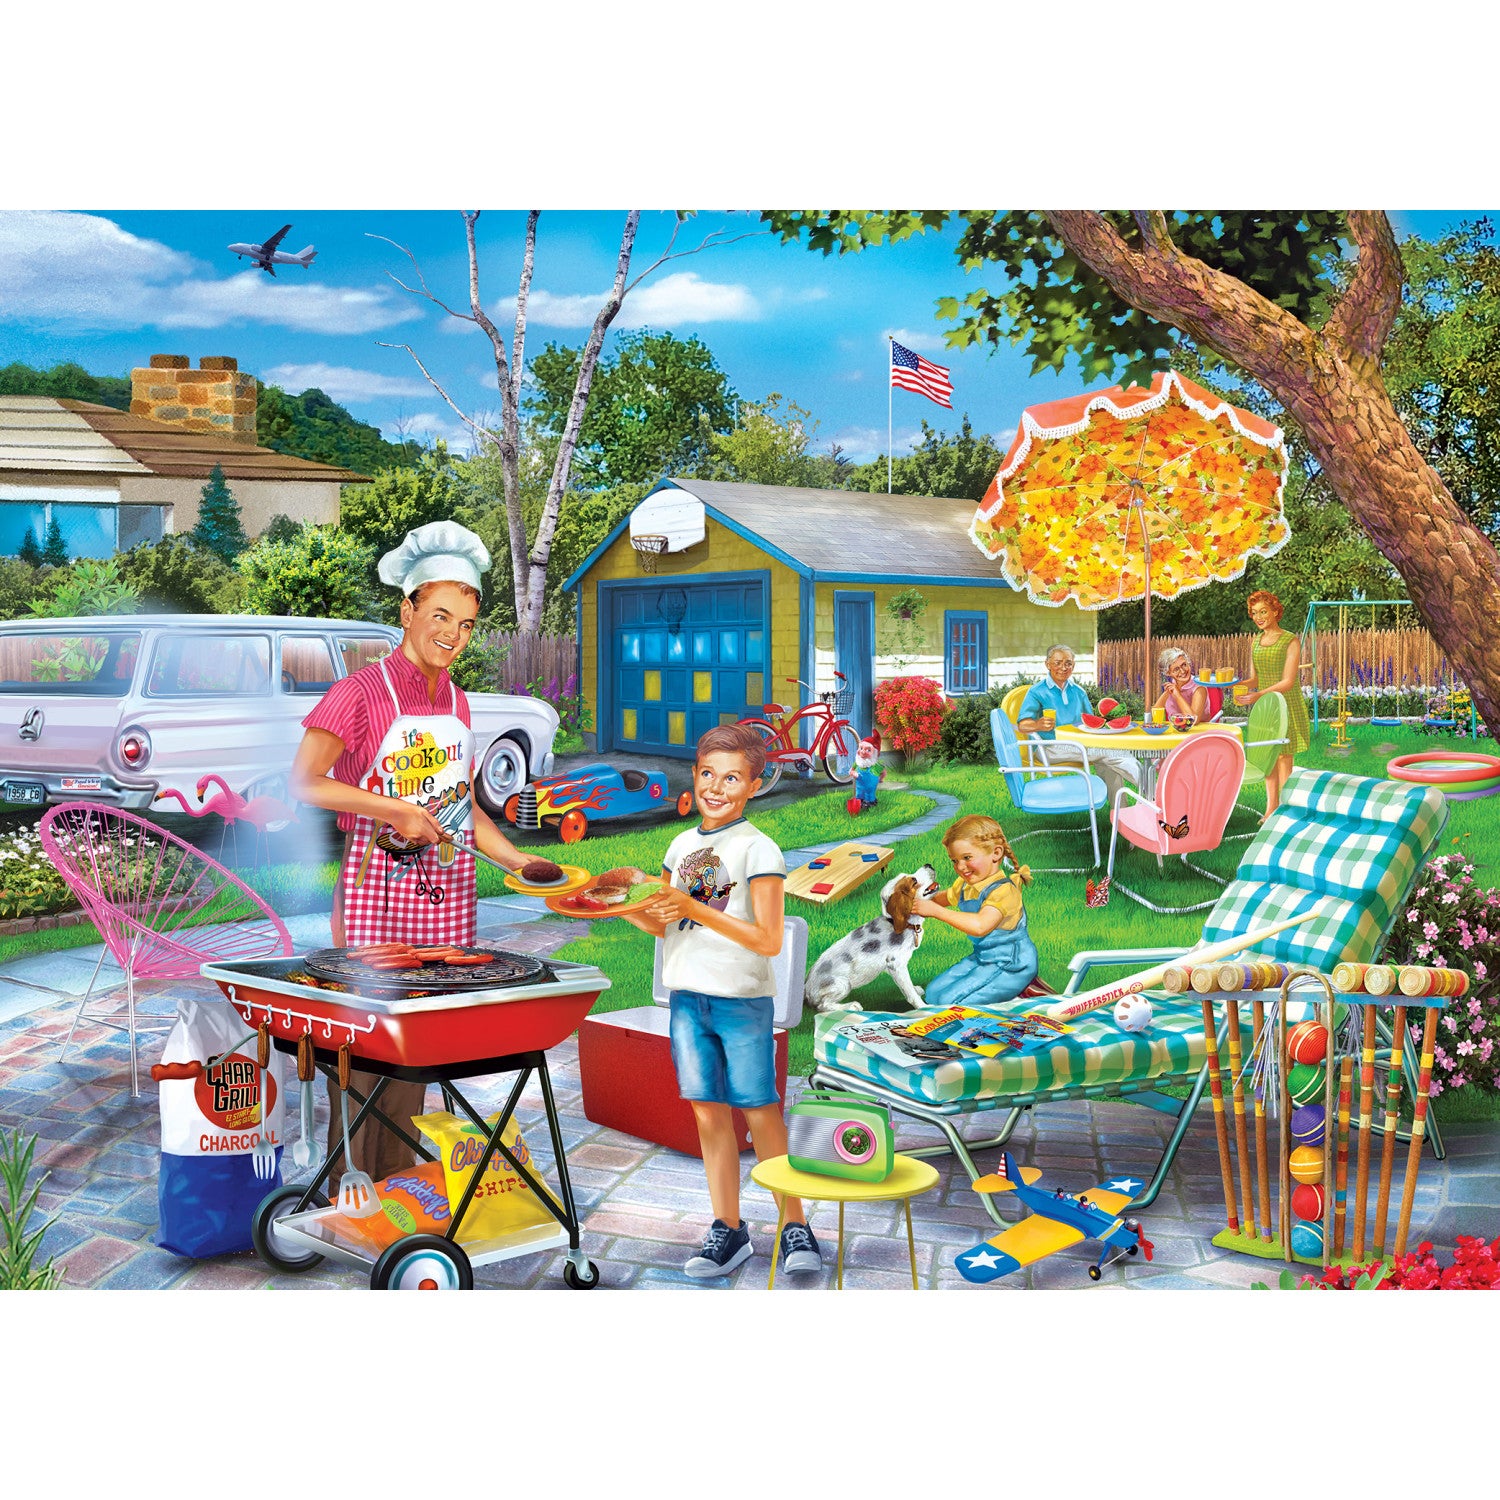 Childhood Dreams - Backyard BBQ 1000 Piece Puzzle